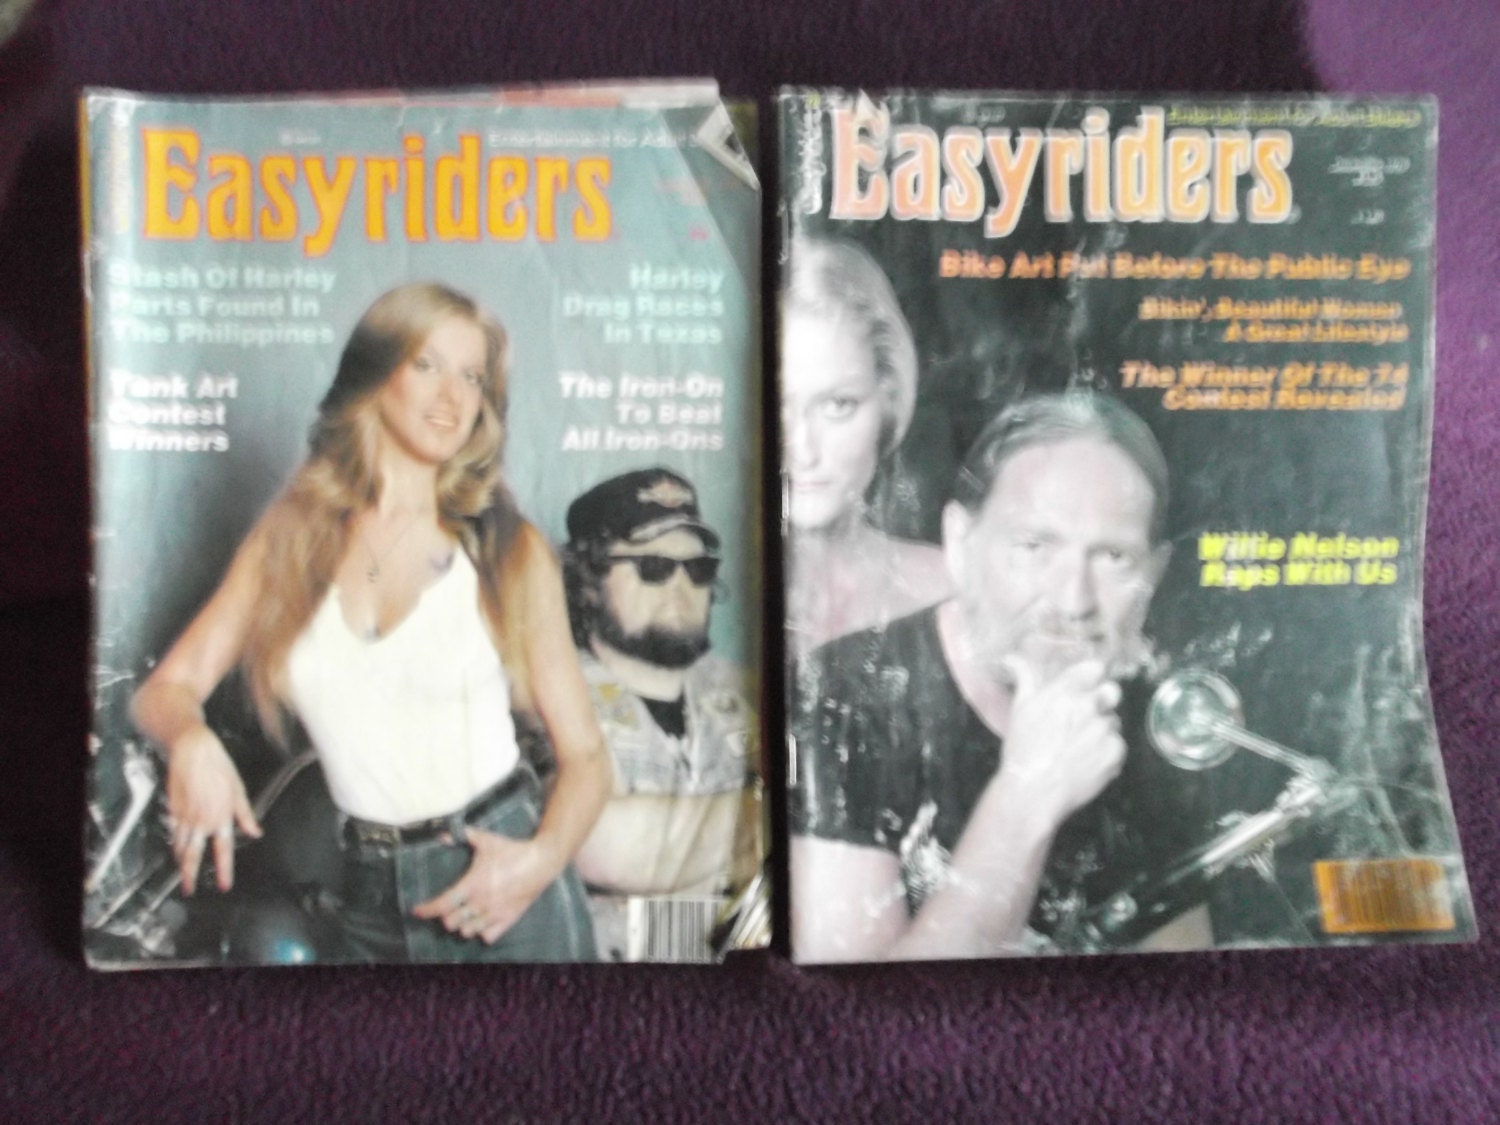 easy rider magazine women